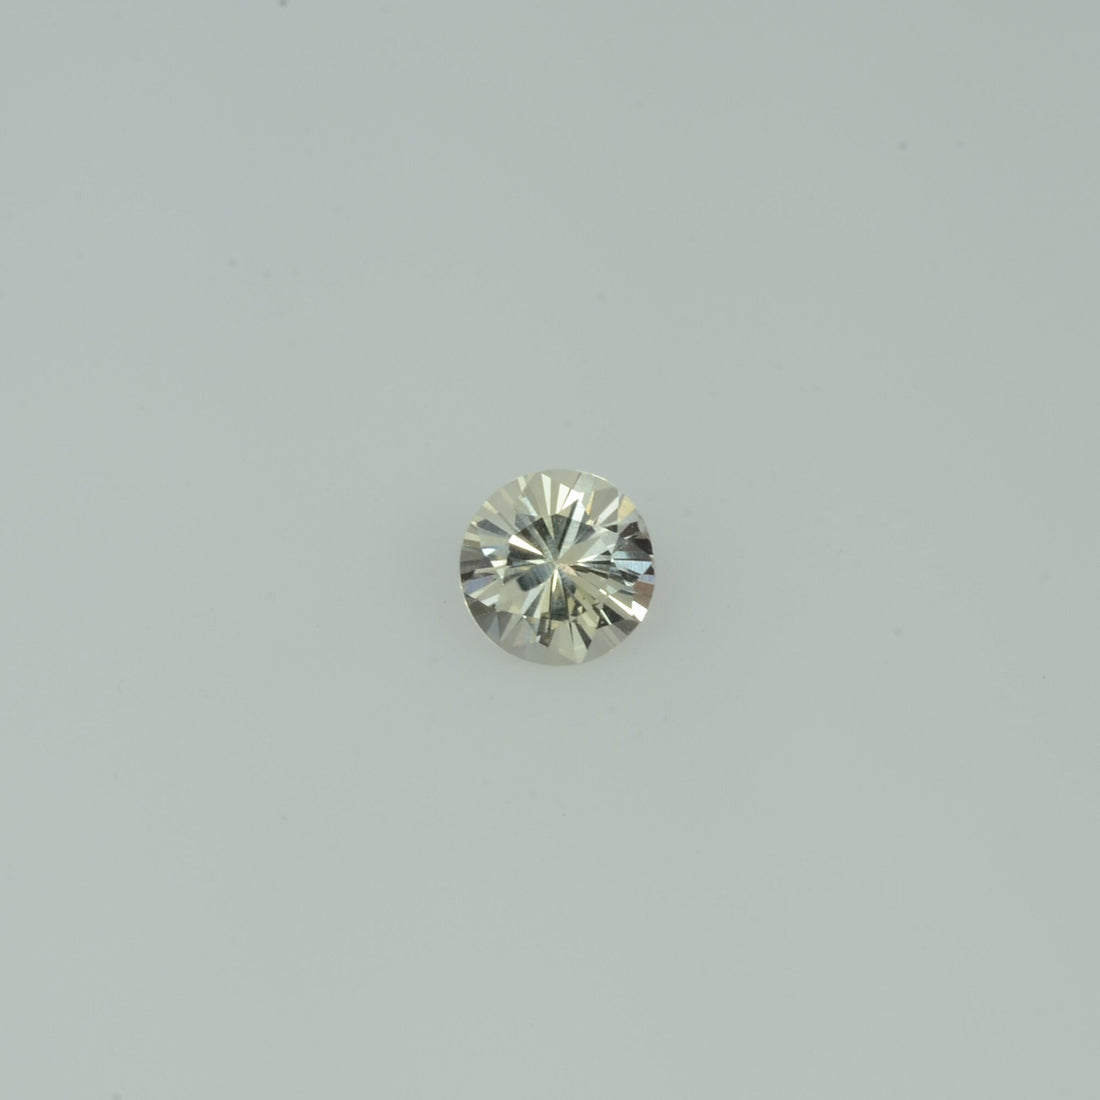 3-5 mm Natural Pastel Yellow  Sapphire Loose Gemstone Round Diamond Cut Cleanish Quality 